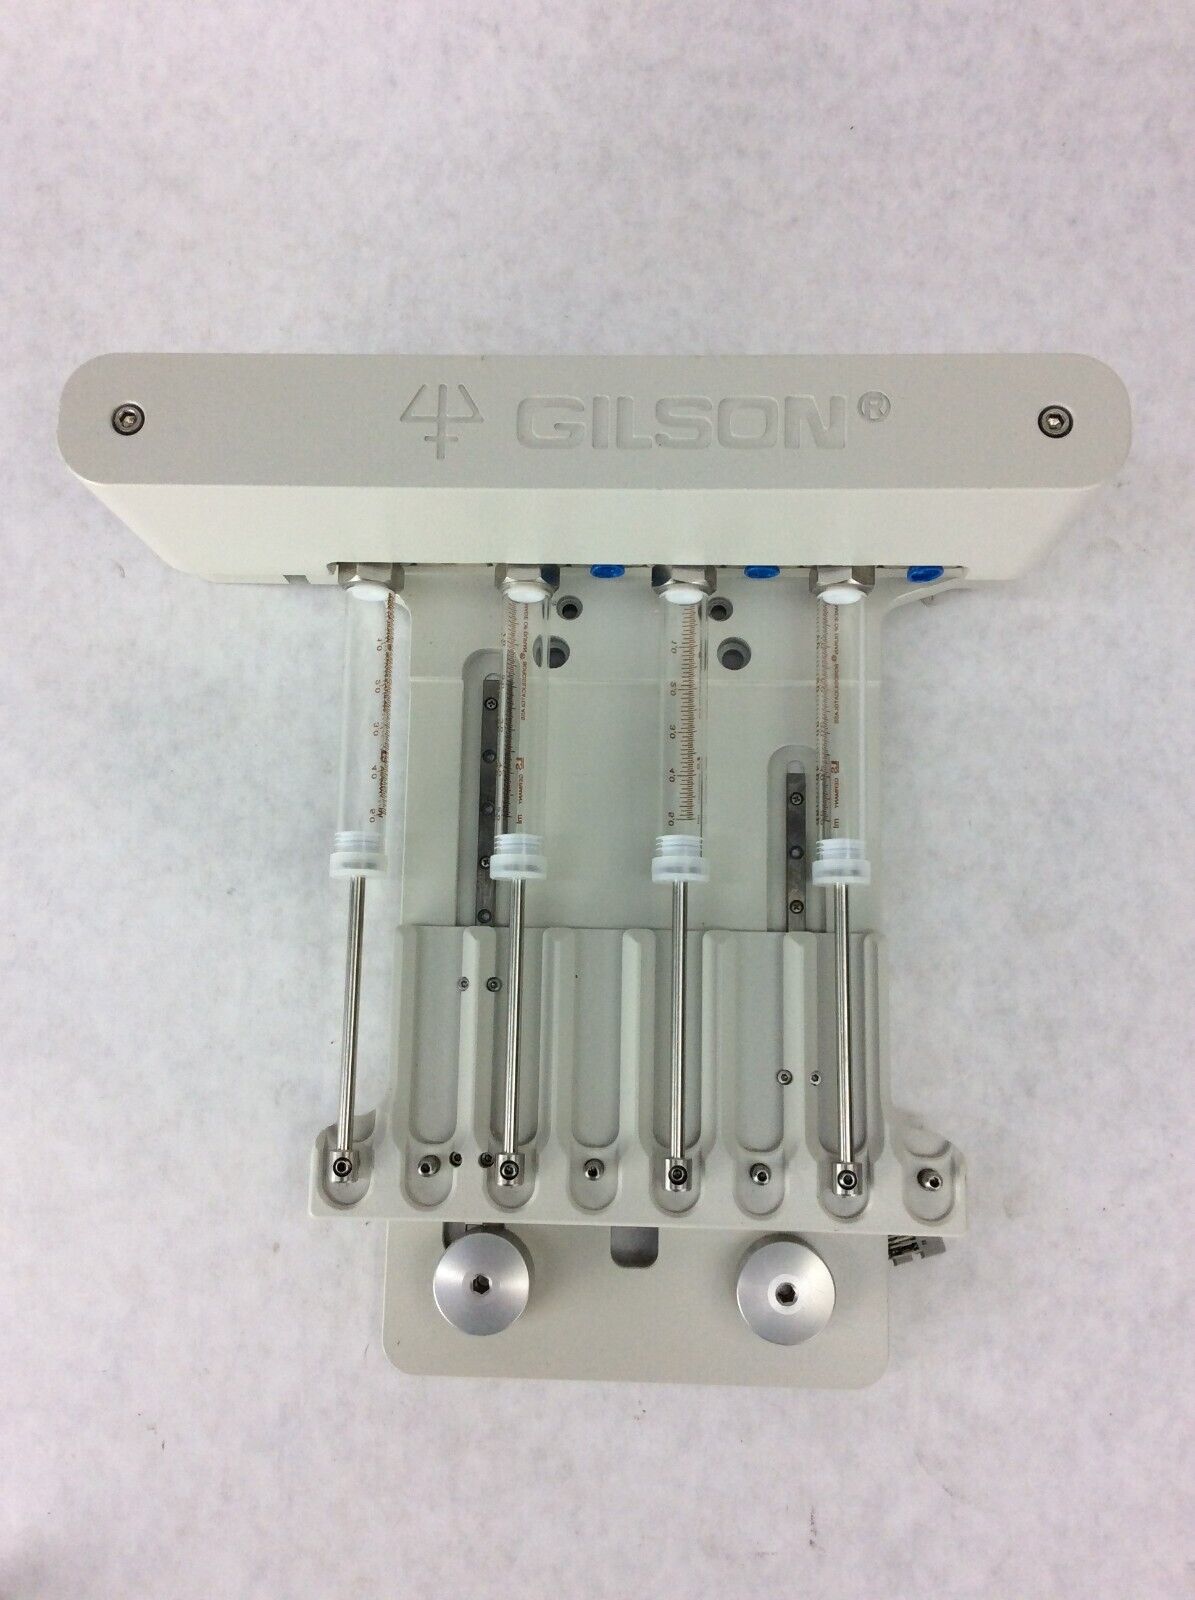 Gilson Motorized 8 Syringe Vial Pump Nebula Liquid Handler